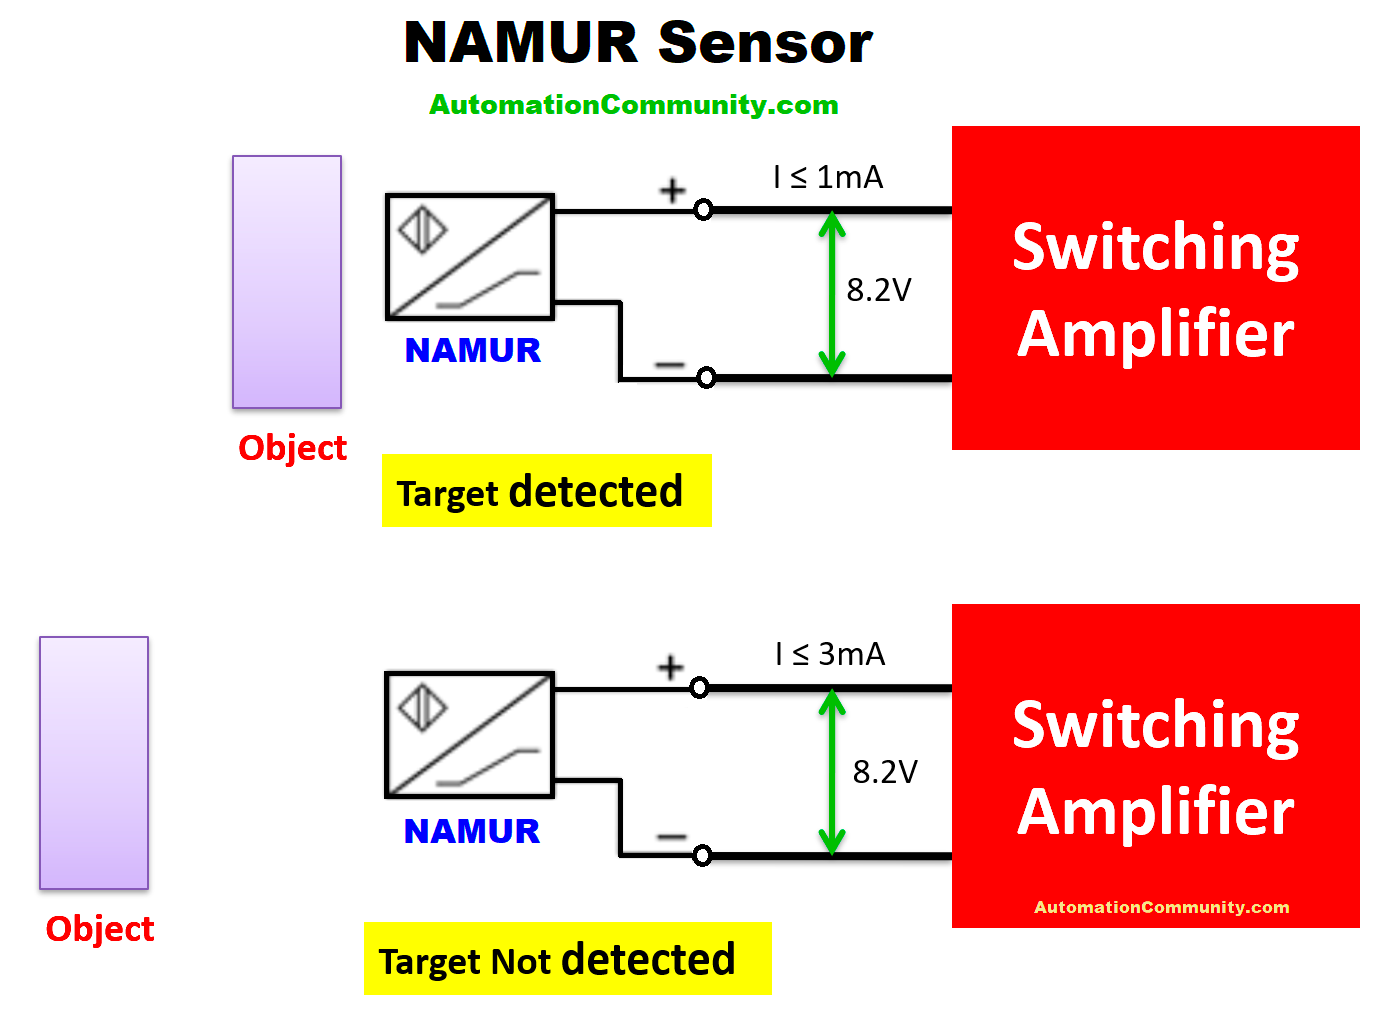 What is a NAMUR Sensor